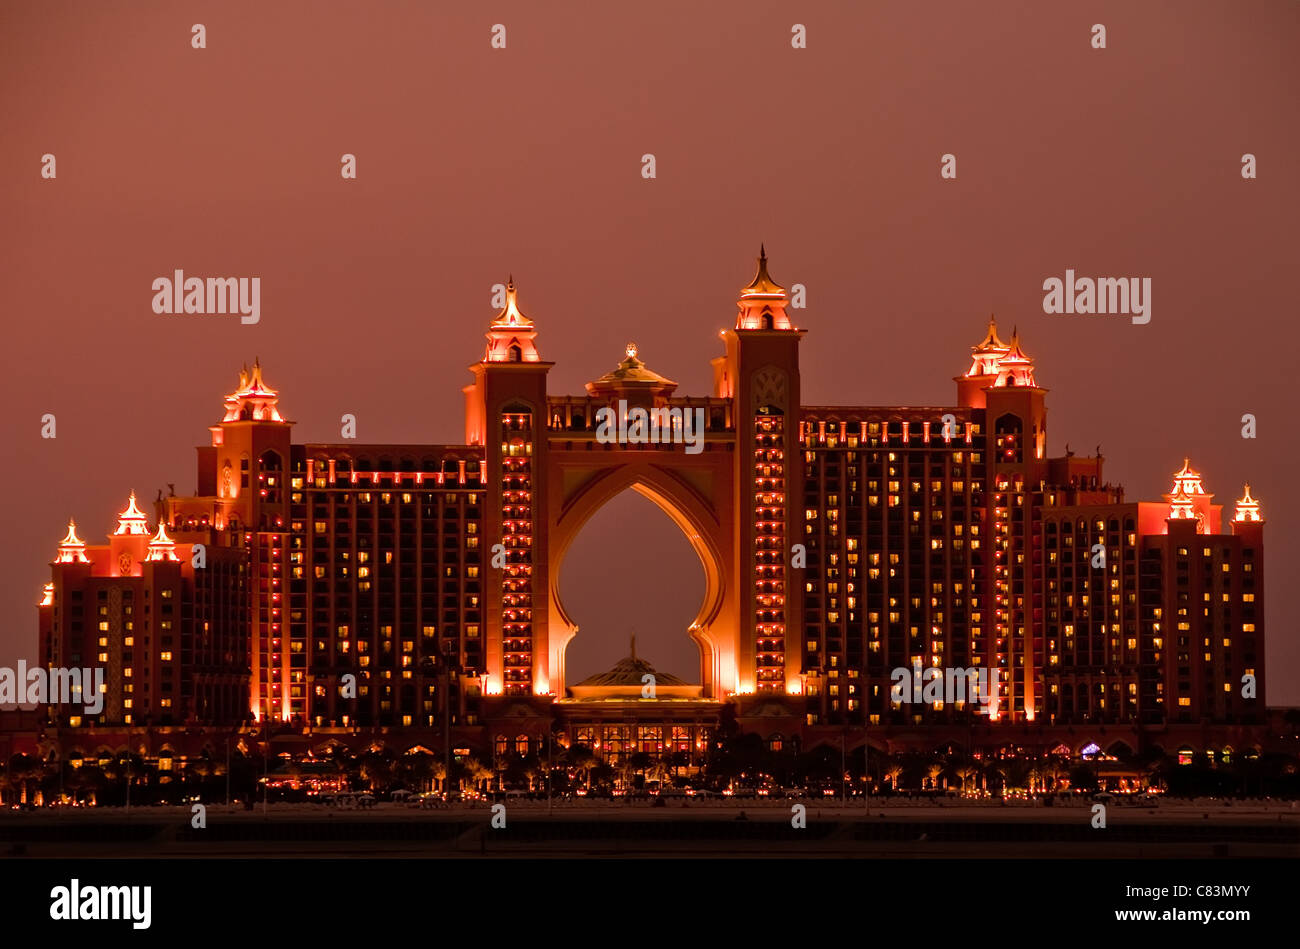 The Atlantis Hotel at dusk, taken from the Palm, Dubai Stock Photo